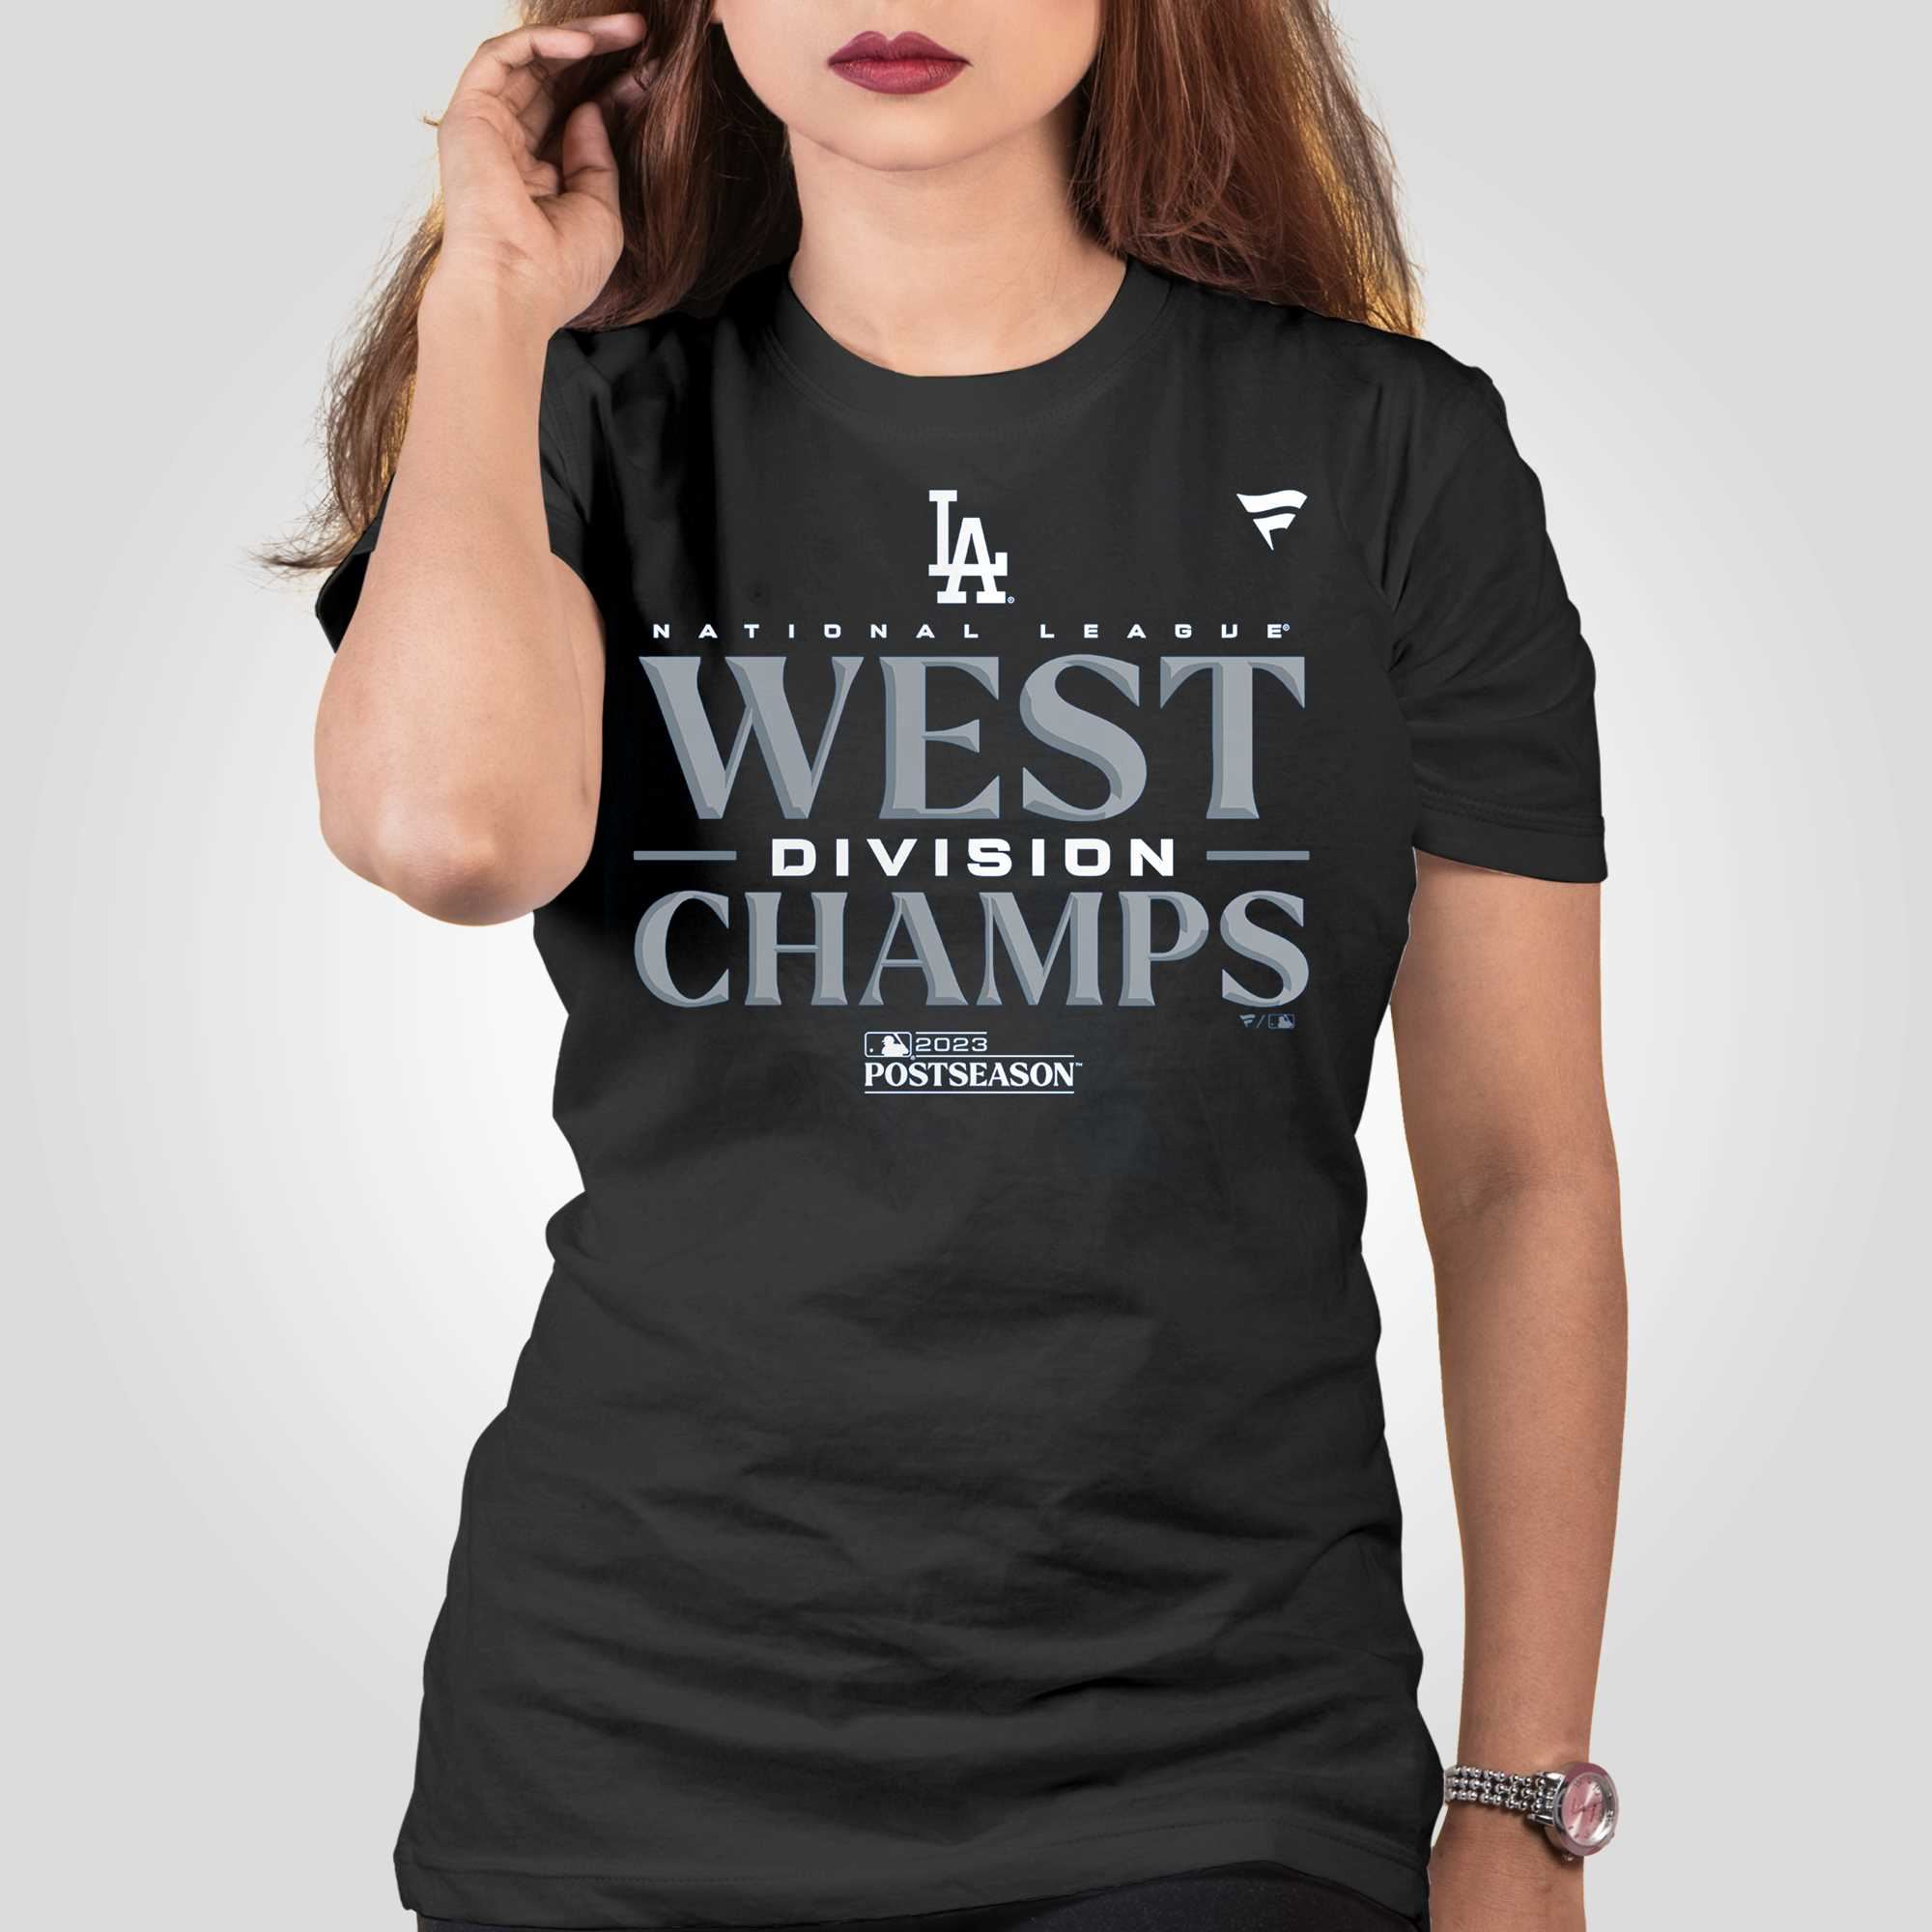 West Division Champions LA Dodgers Shirt, hoodie, longsleeve, sweatshirt,  v-neck tee